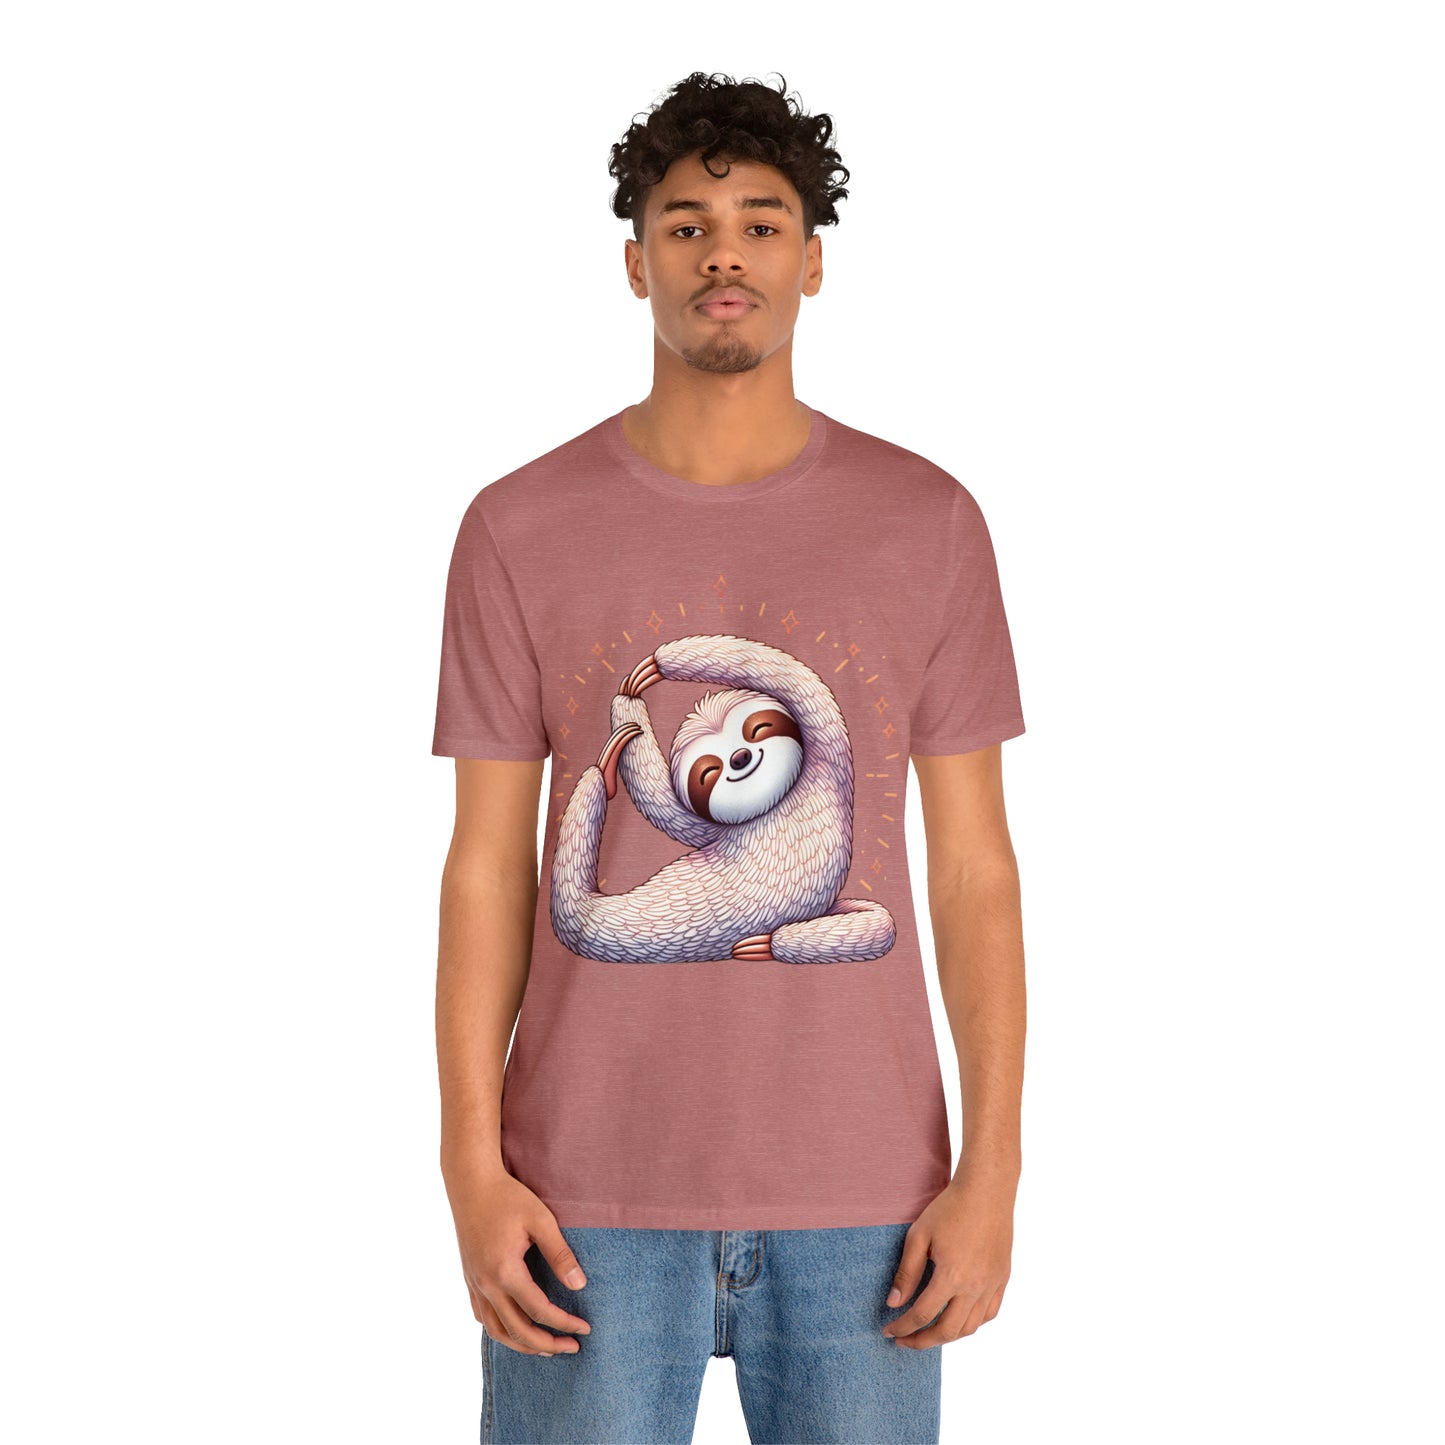 Sloth Yoga T-Shirt, Funny T-Shirt, Sloth Gifts, Cuteness Overload, Apparel